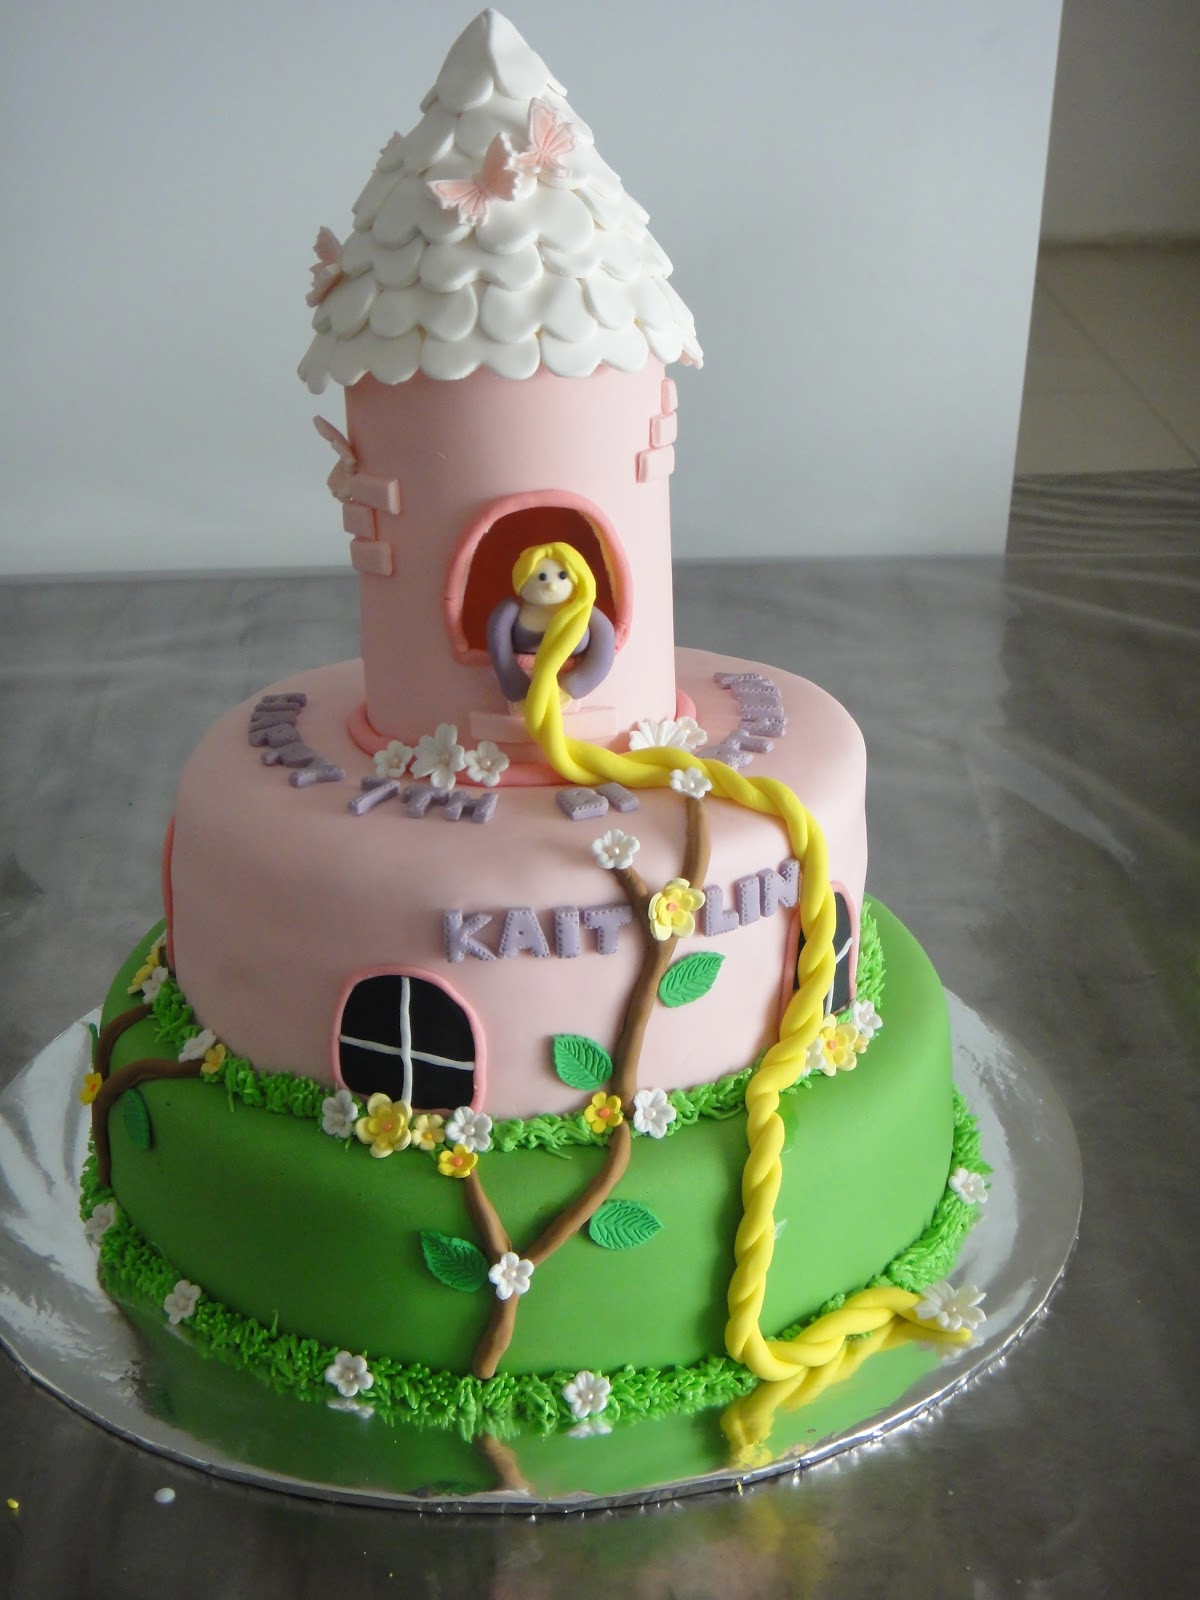 Best ideas about Rapunzel Birthday Cake
. Save or Pin Tiffany s Creations Rapunzel Birthday Cake Now.